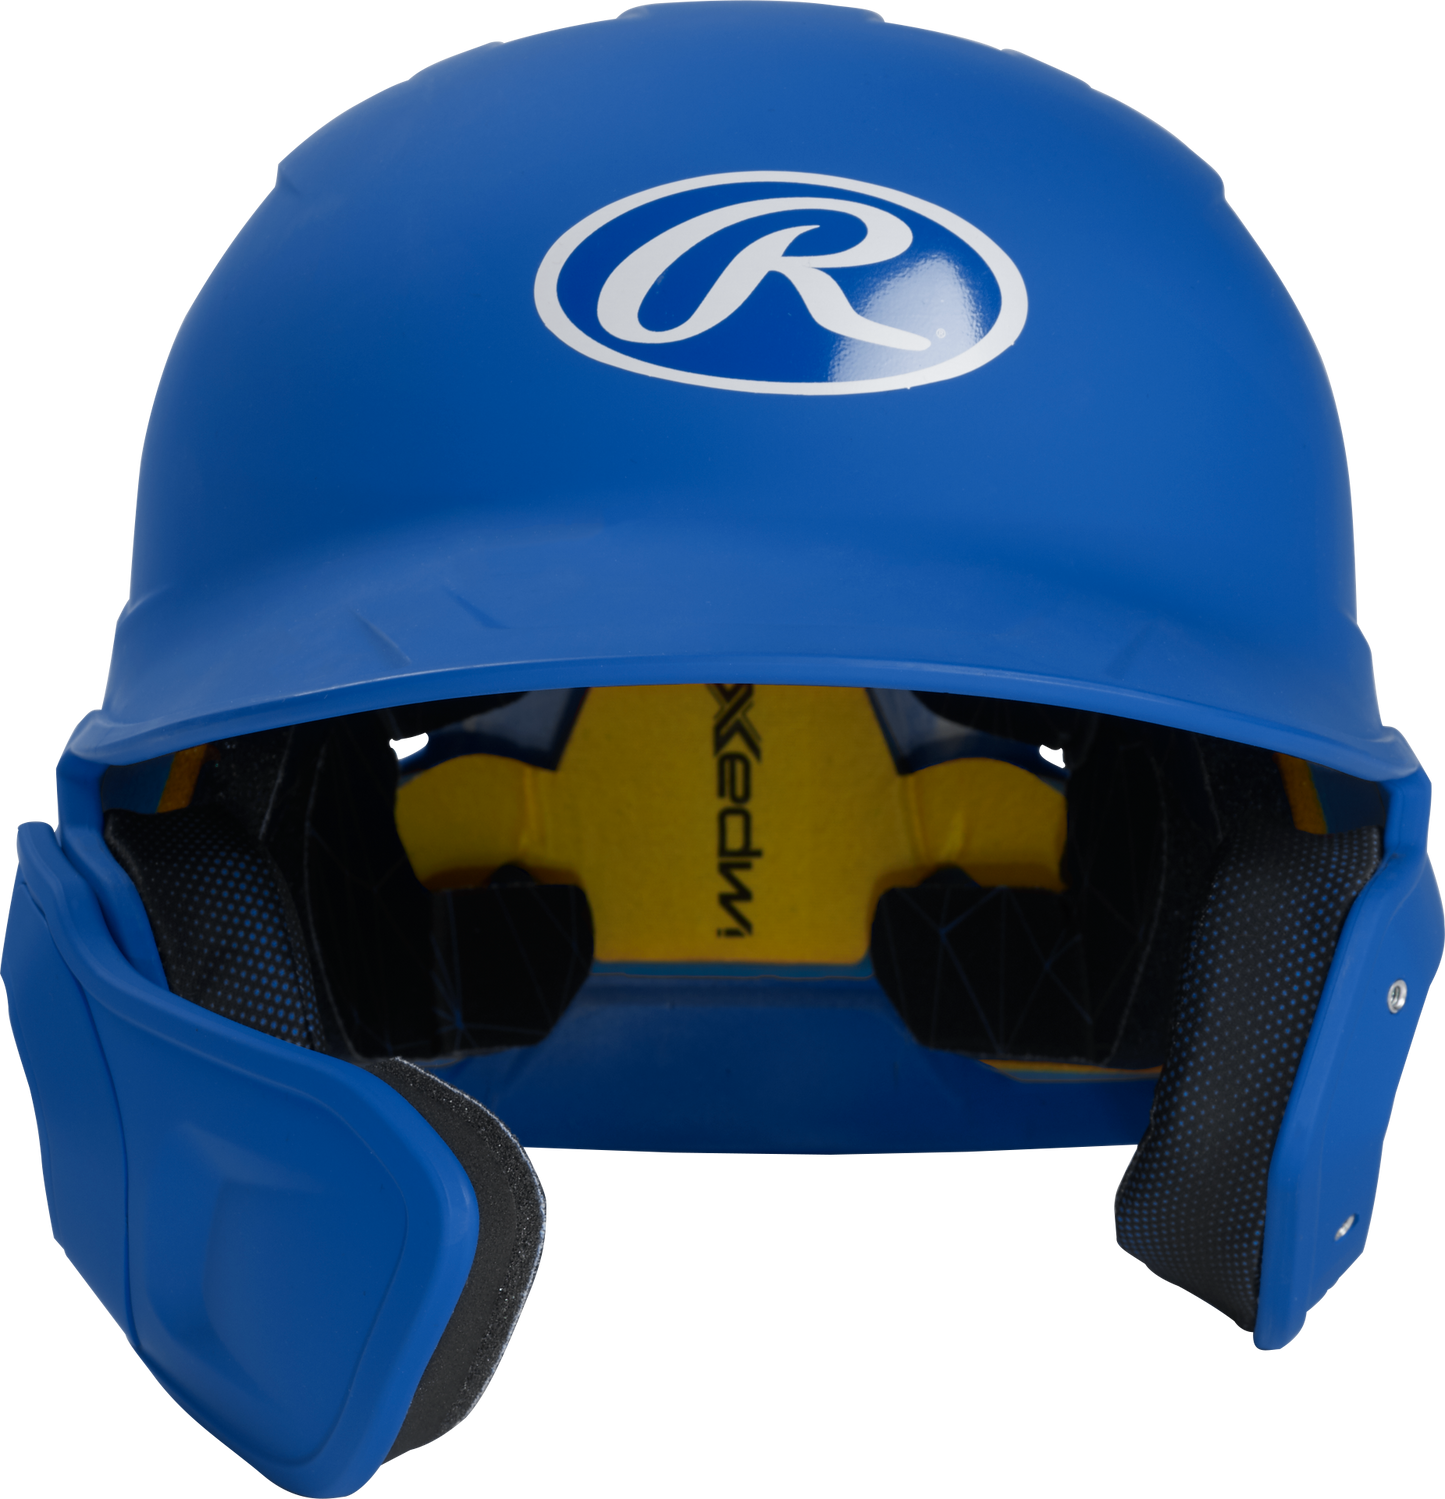 Rawlings Mach Matte Batting Helmet with Left Handed Batter Extension